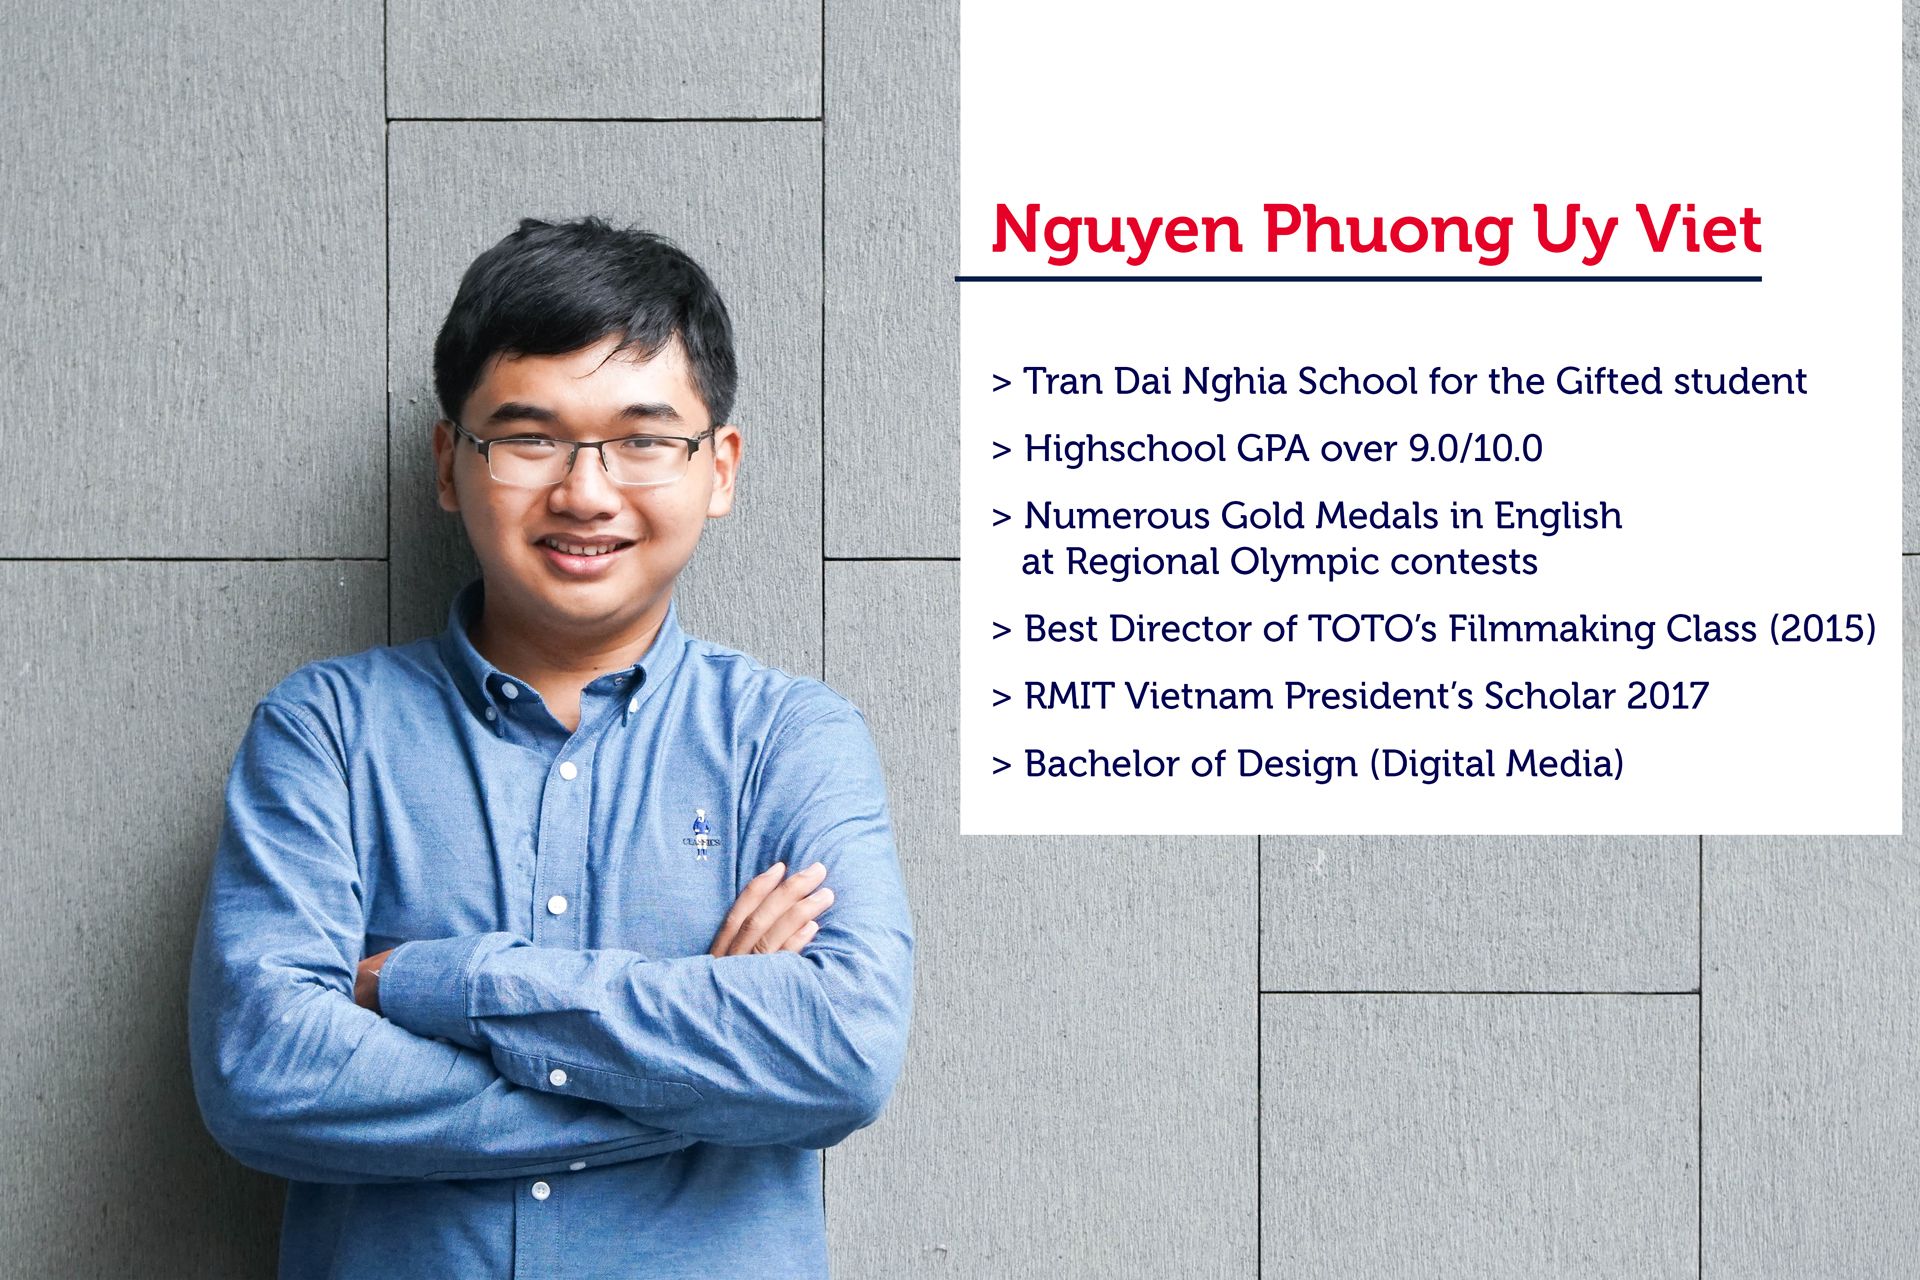 Nguyen Phuong Uy Viet, a Bachelor of Design (Digital Media) student, is a 2017 President’s Scholar. 